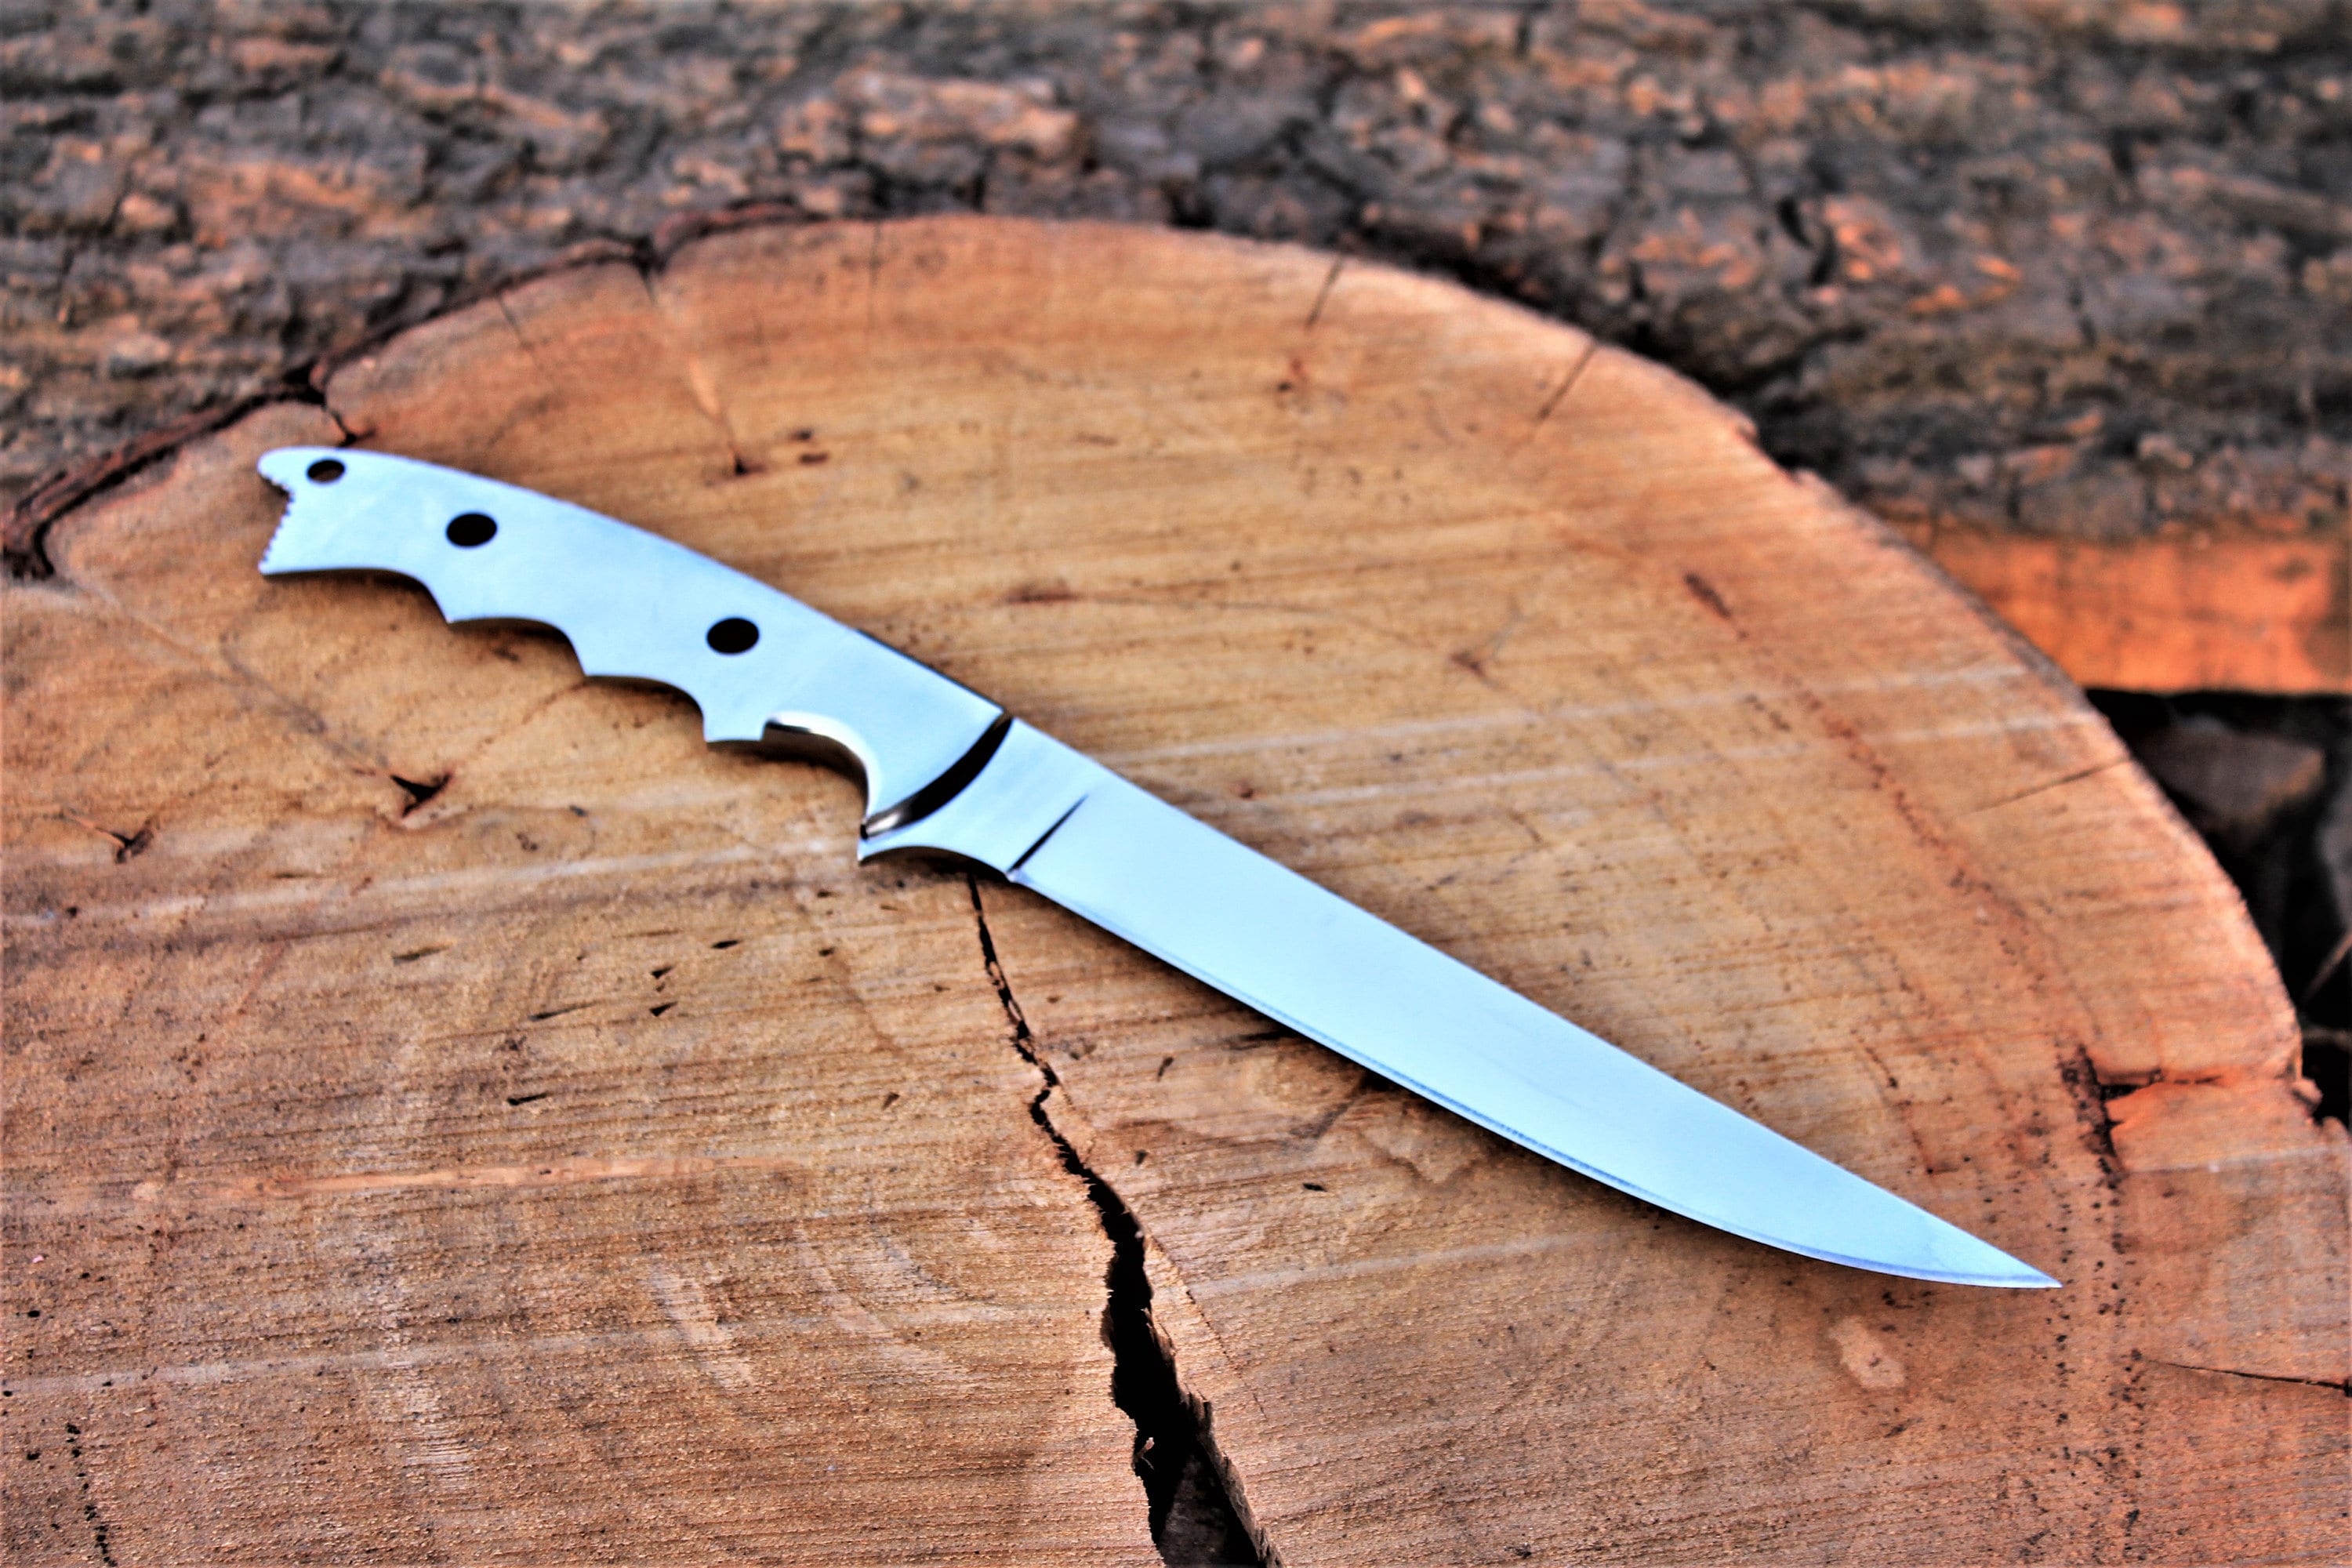  ColdLand Knives Damascus Knife Making Kit DIY Fish